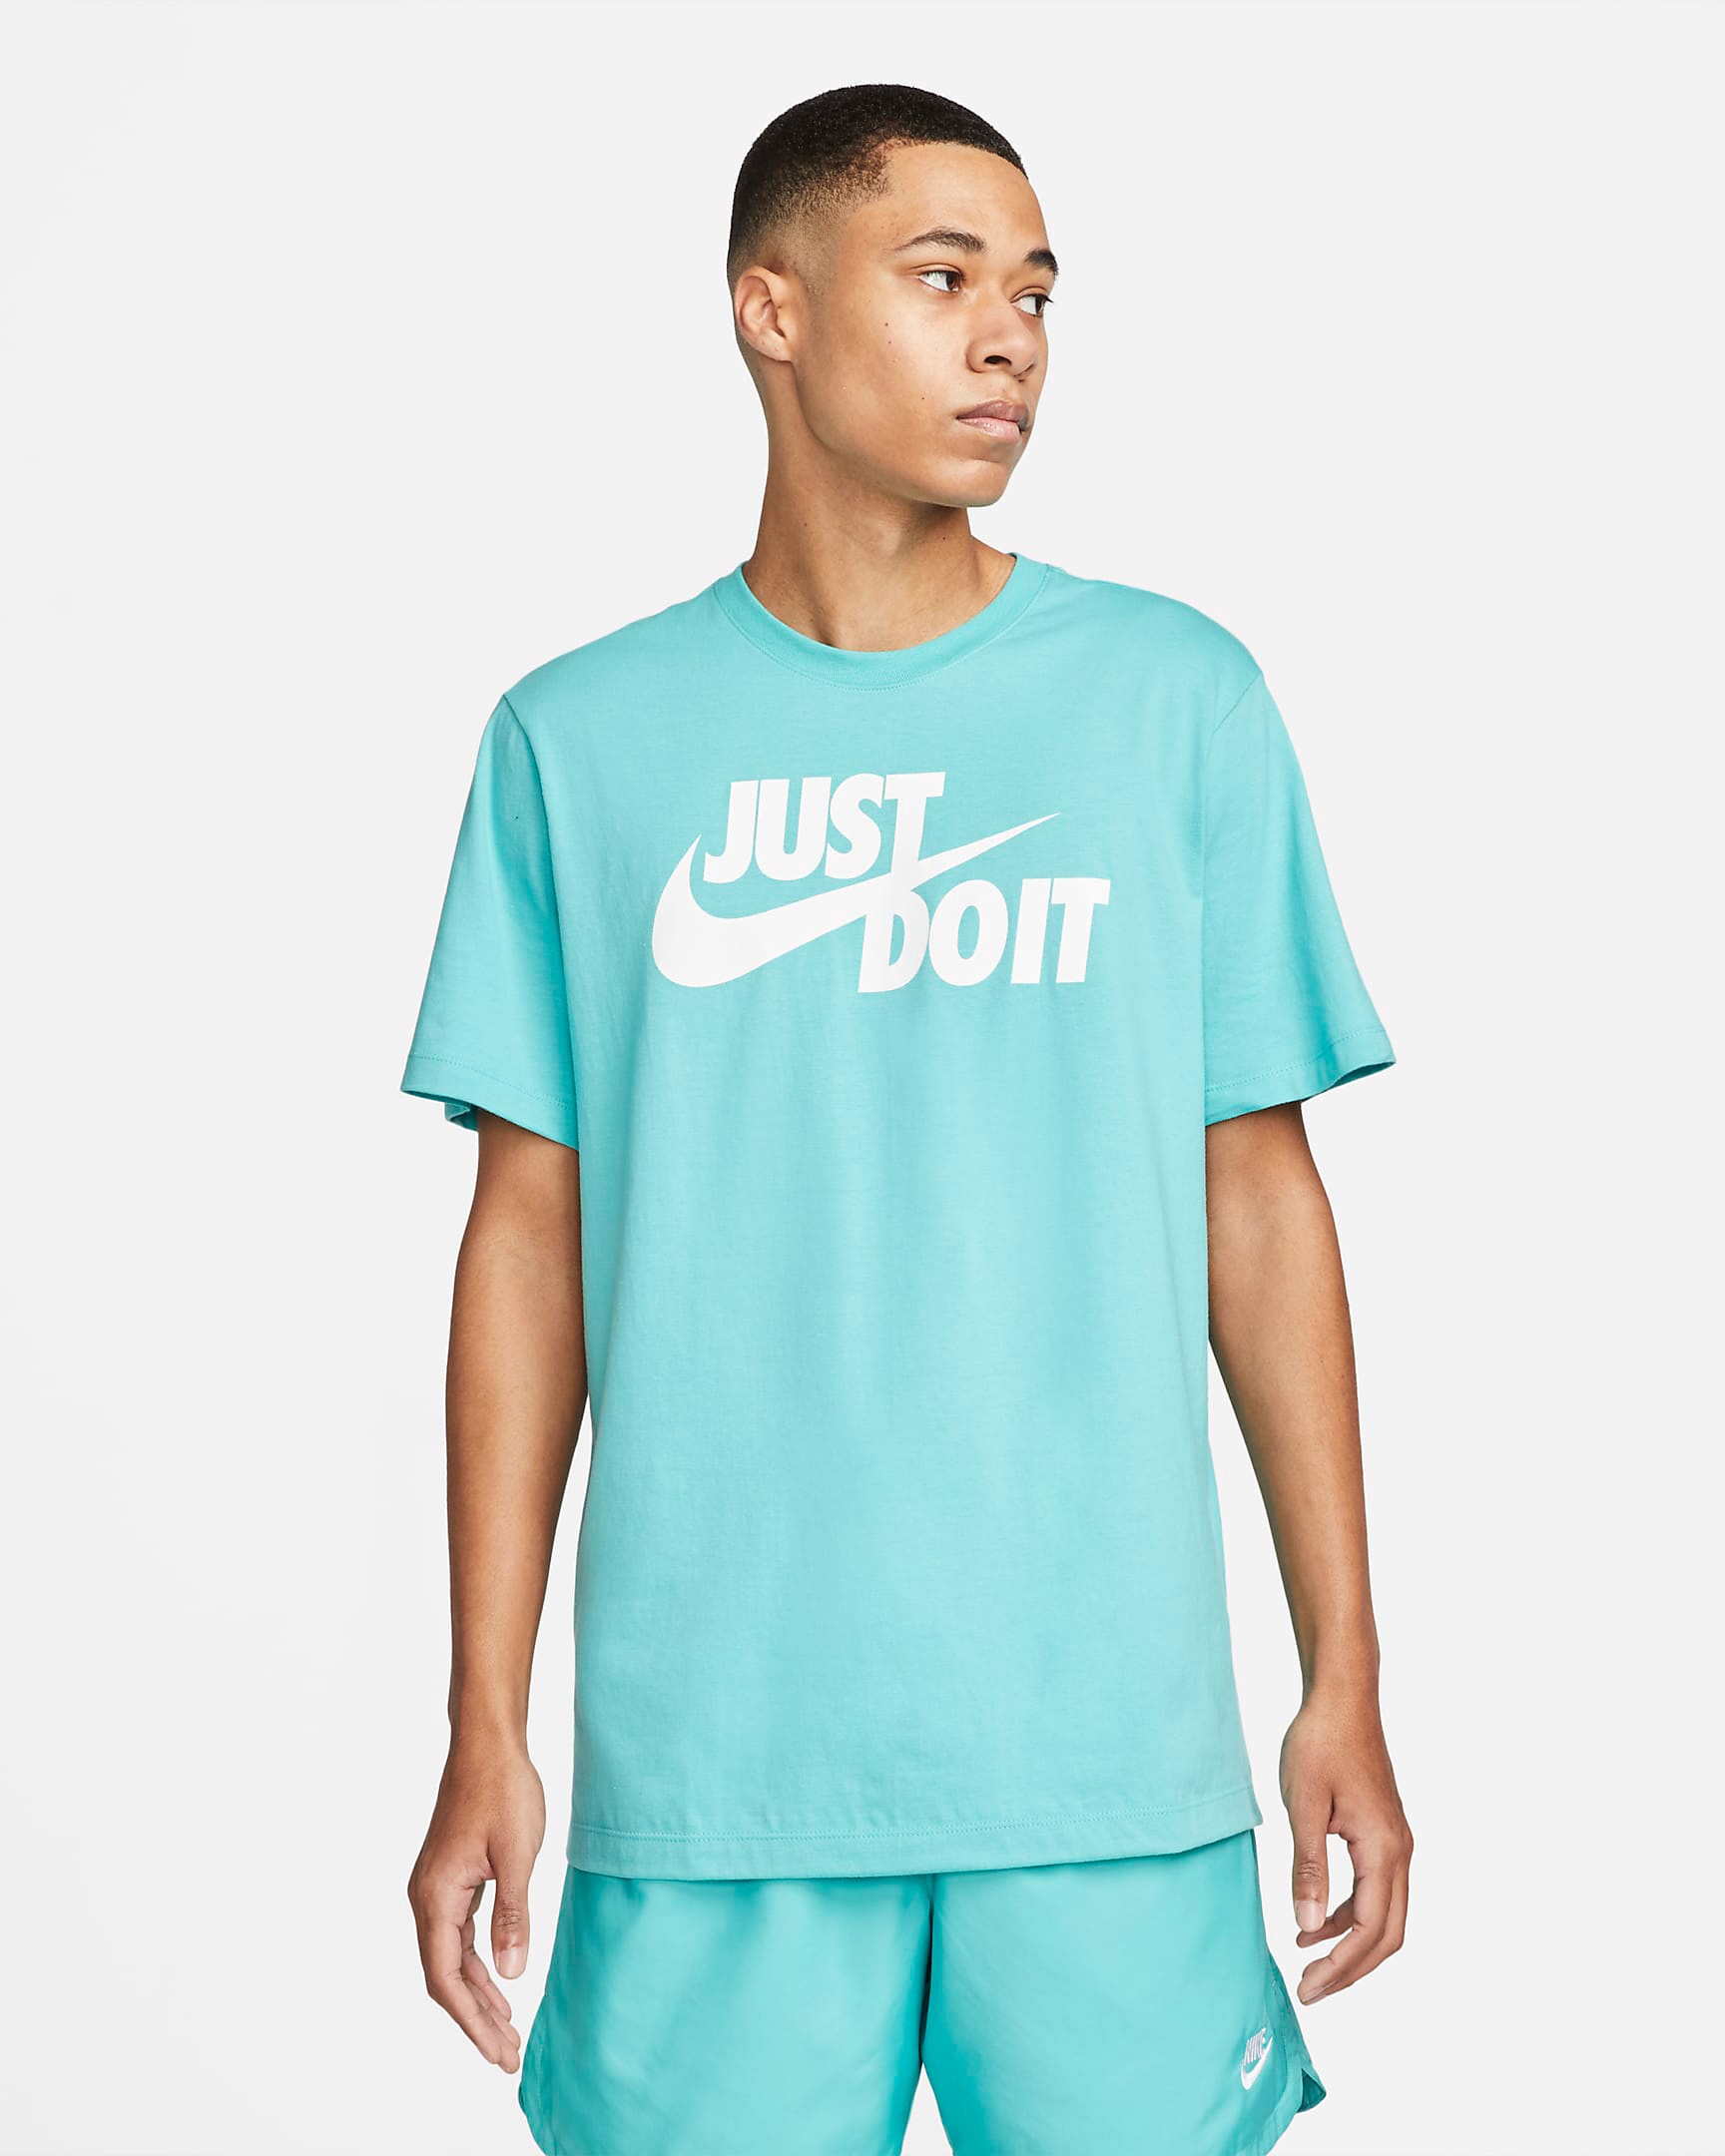 Nike Air Max Plus White Hyper Jade Shirts Clothing Outfits